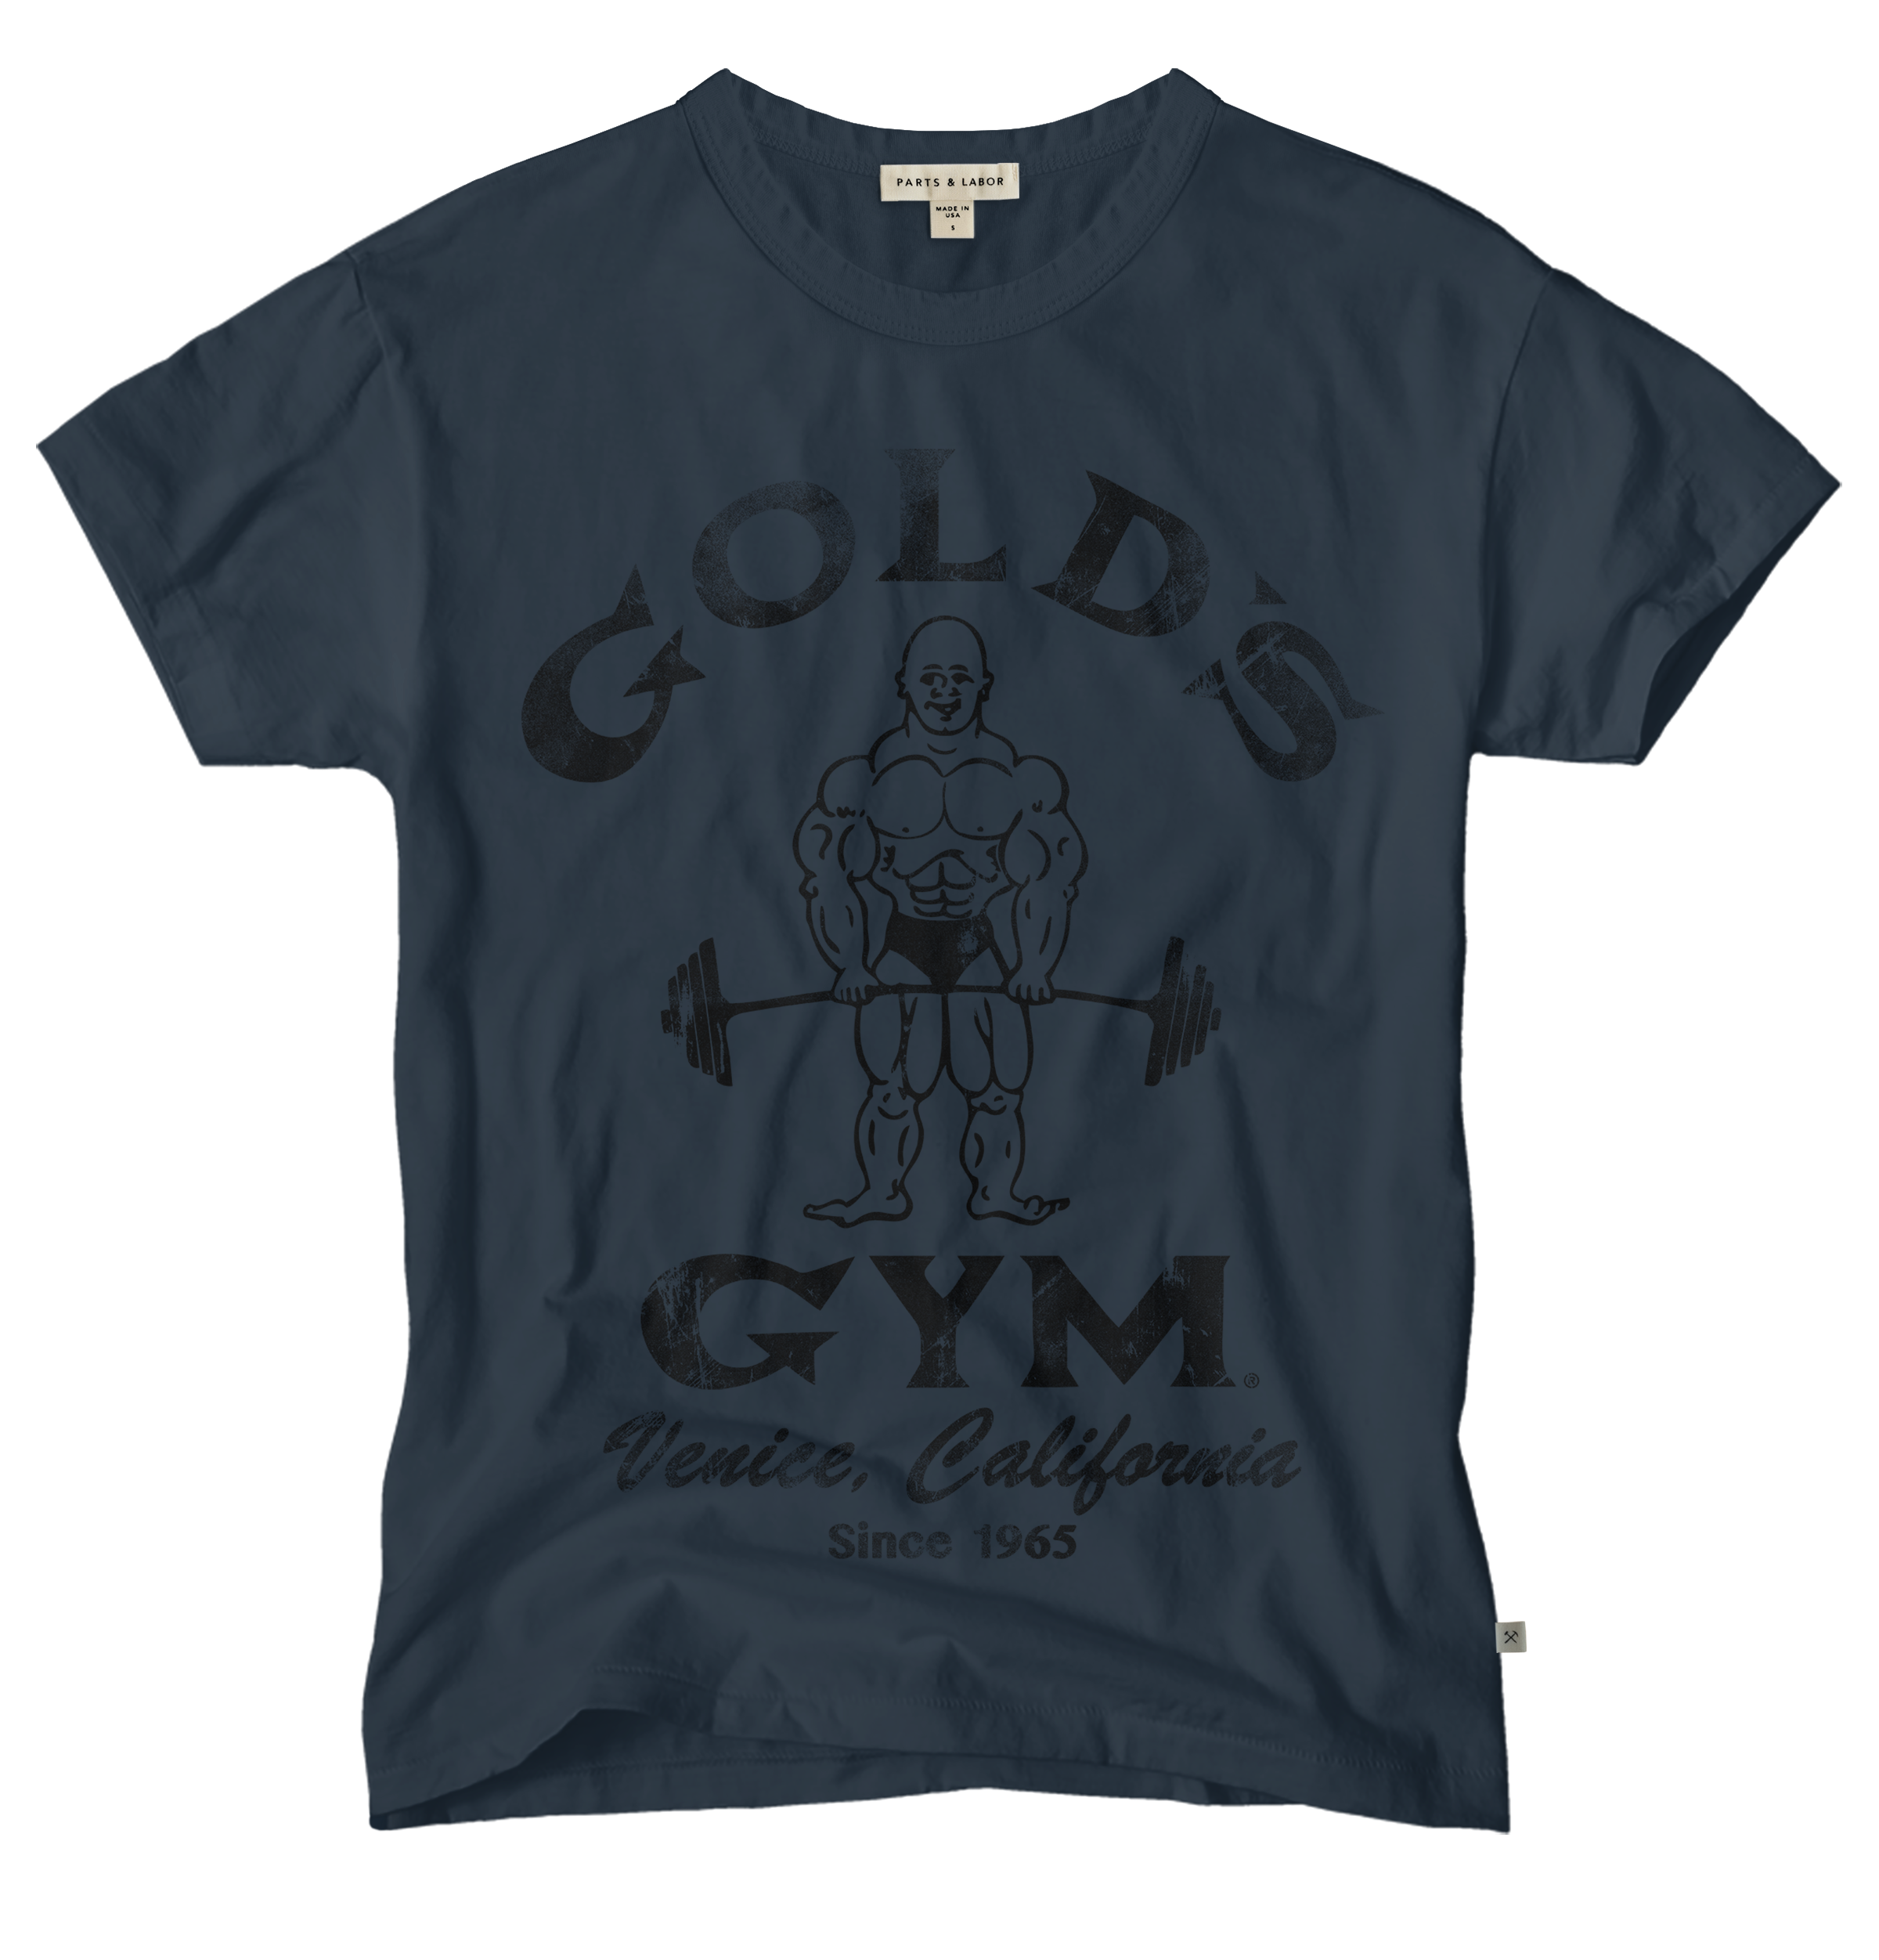 Gold's Gym Venice California Strongman Vintage Graphic T-shirt - Blue